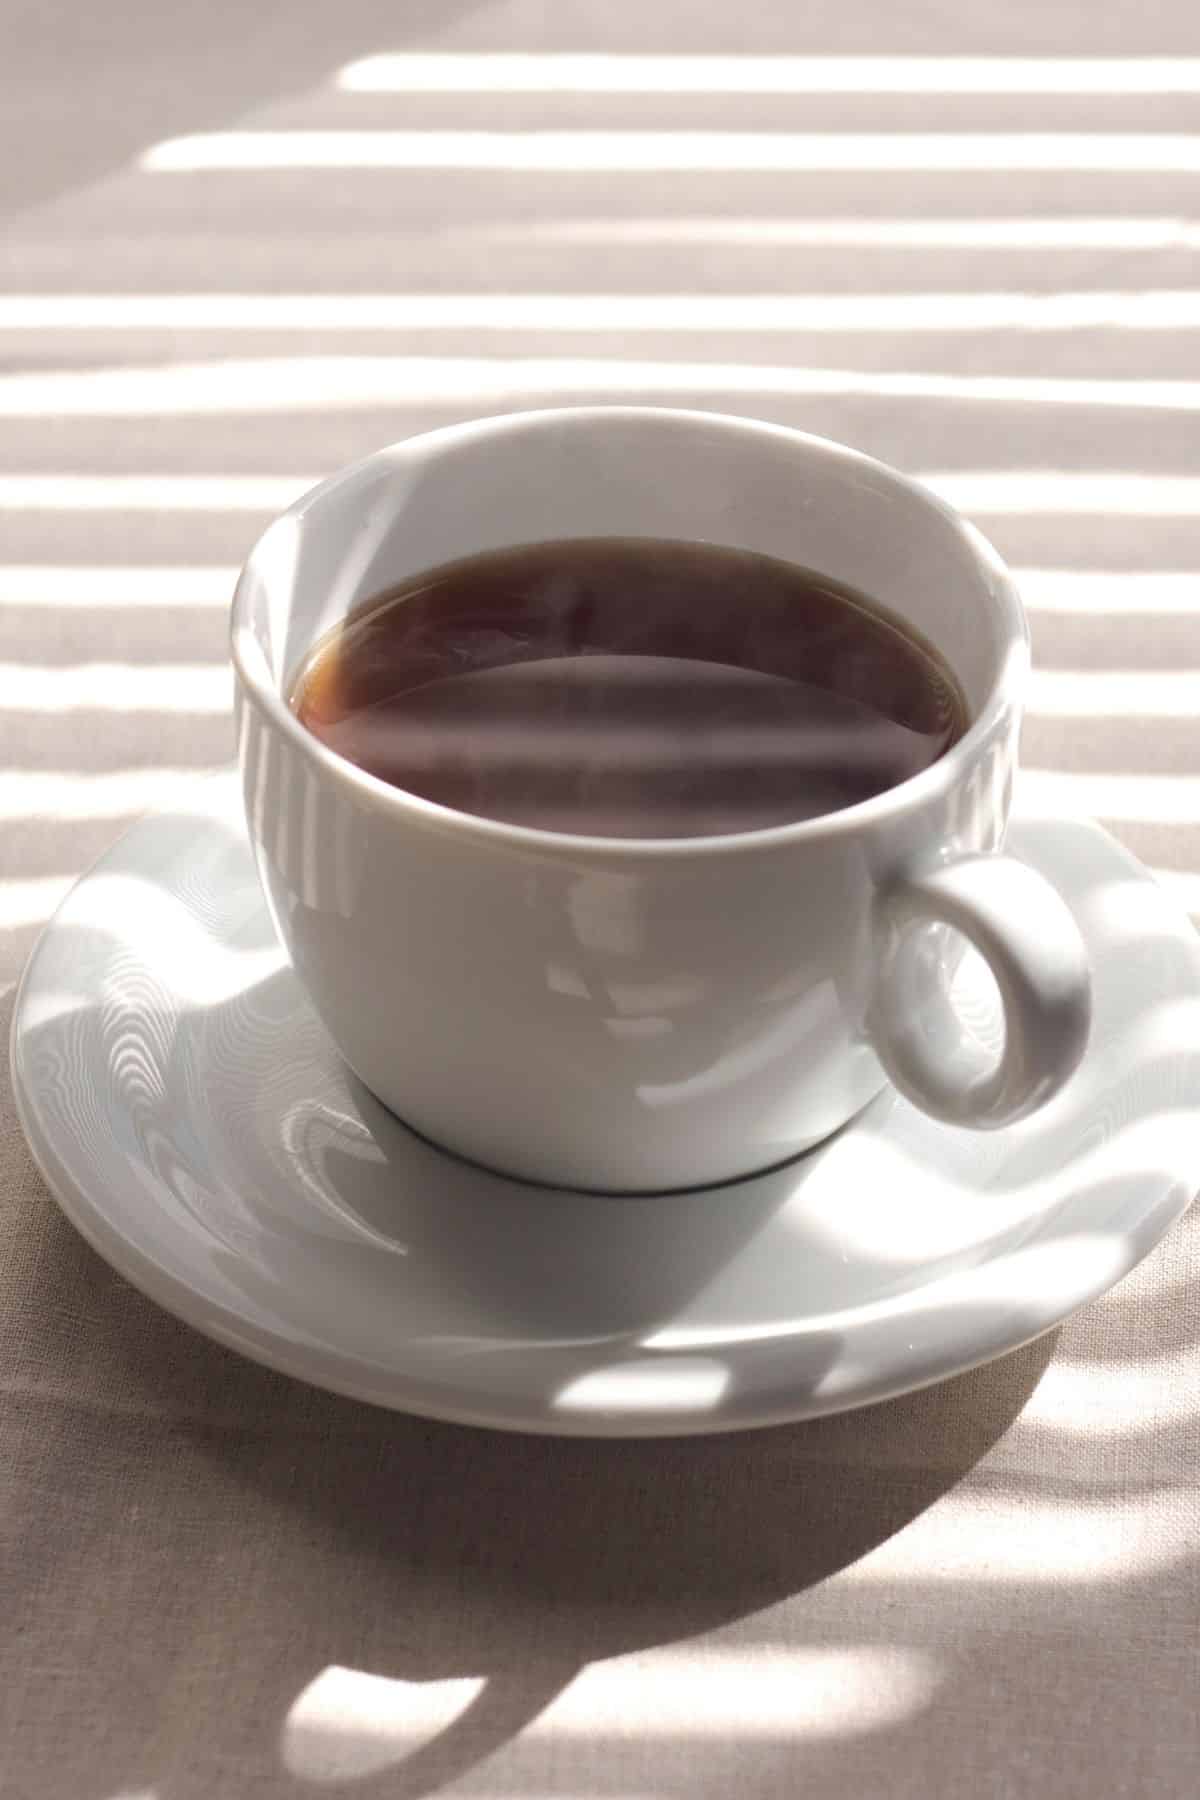 mug of steaming coffee on table.